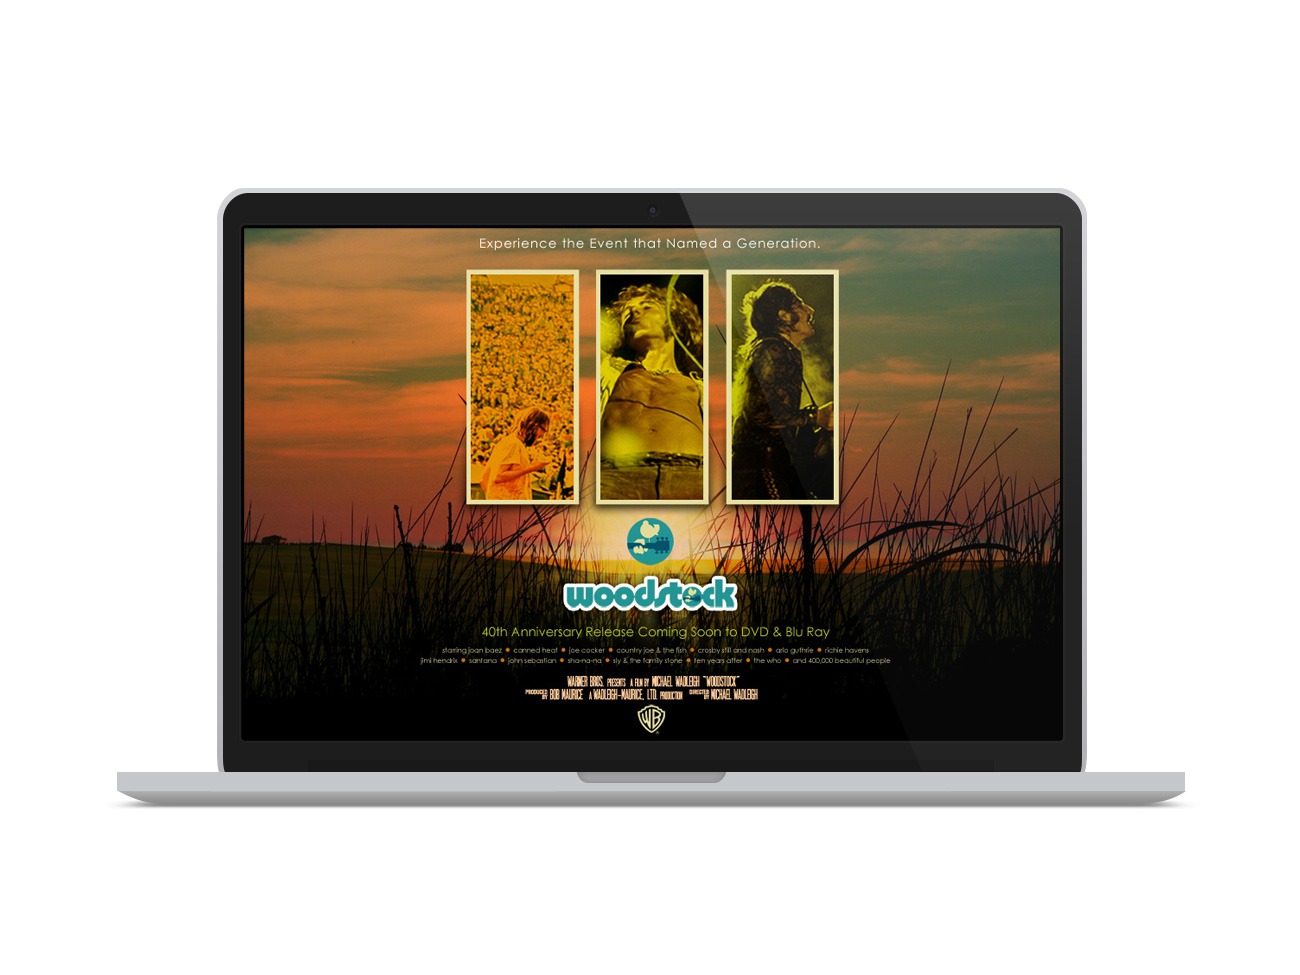 Woodstock 40th Anniversary Website Design